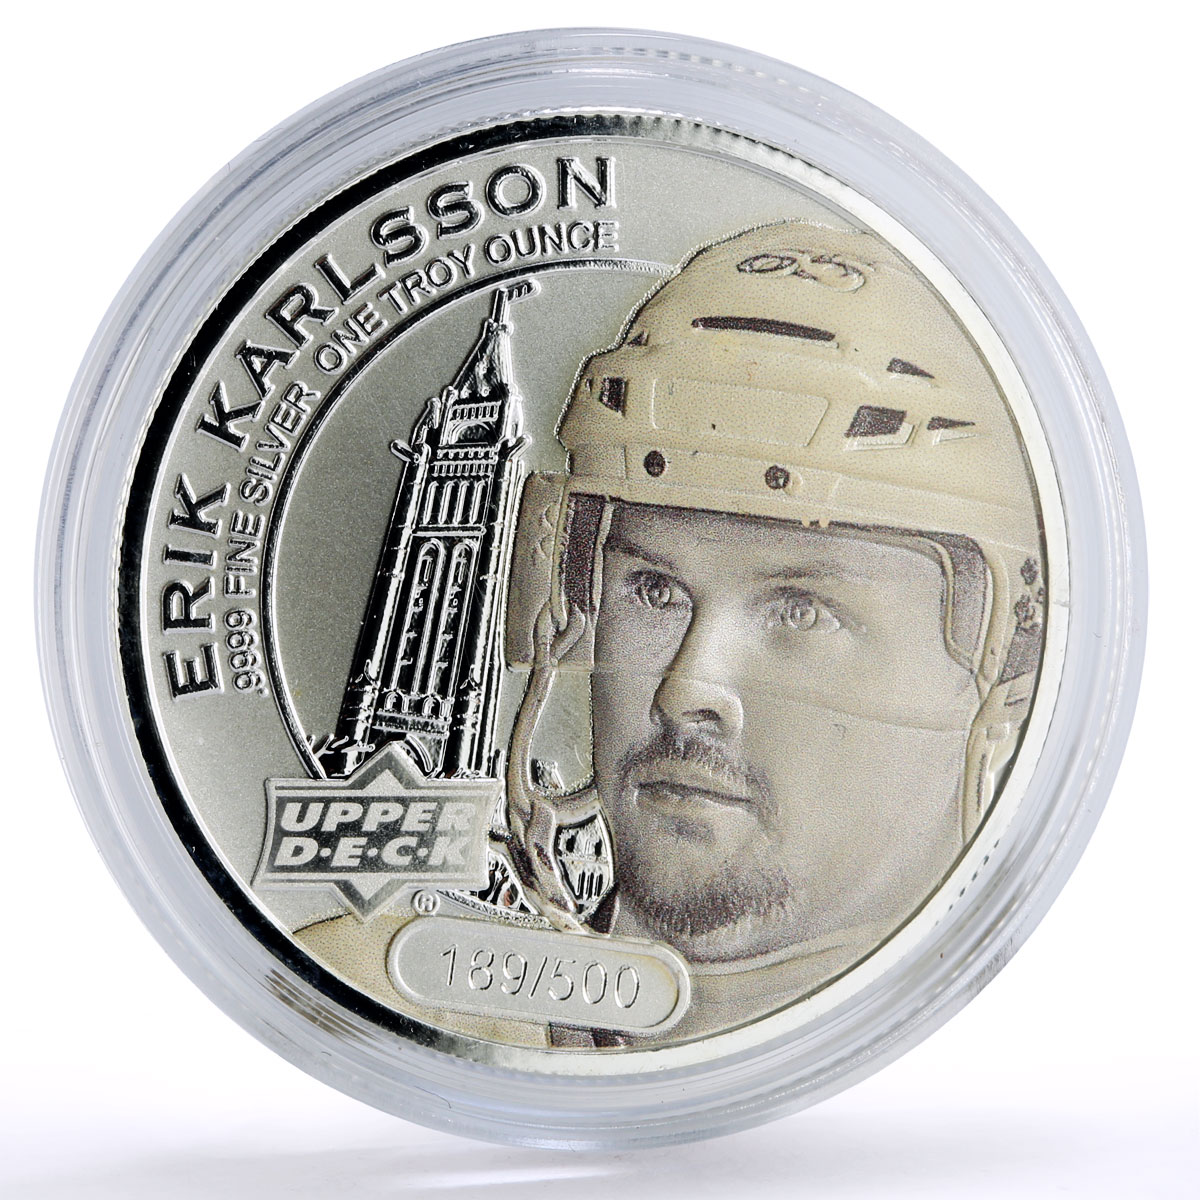 Cook Islands 1 $ Upper Deck Grandeur NHL Hockey Erik Karlsson silver coin 2017